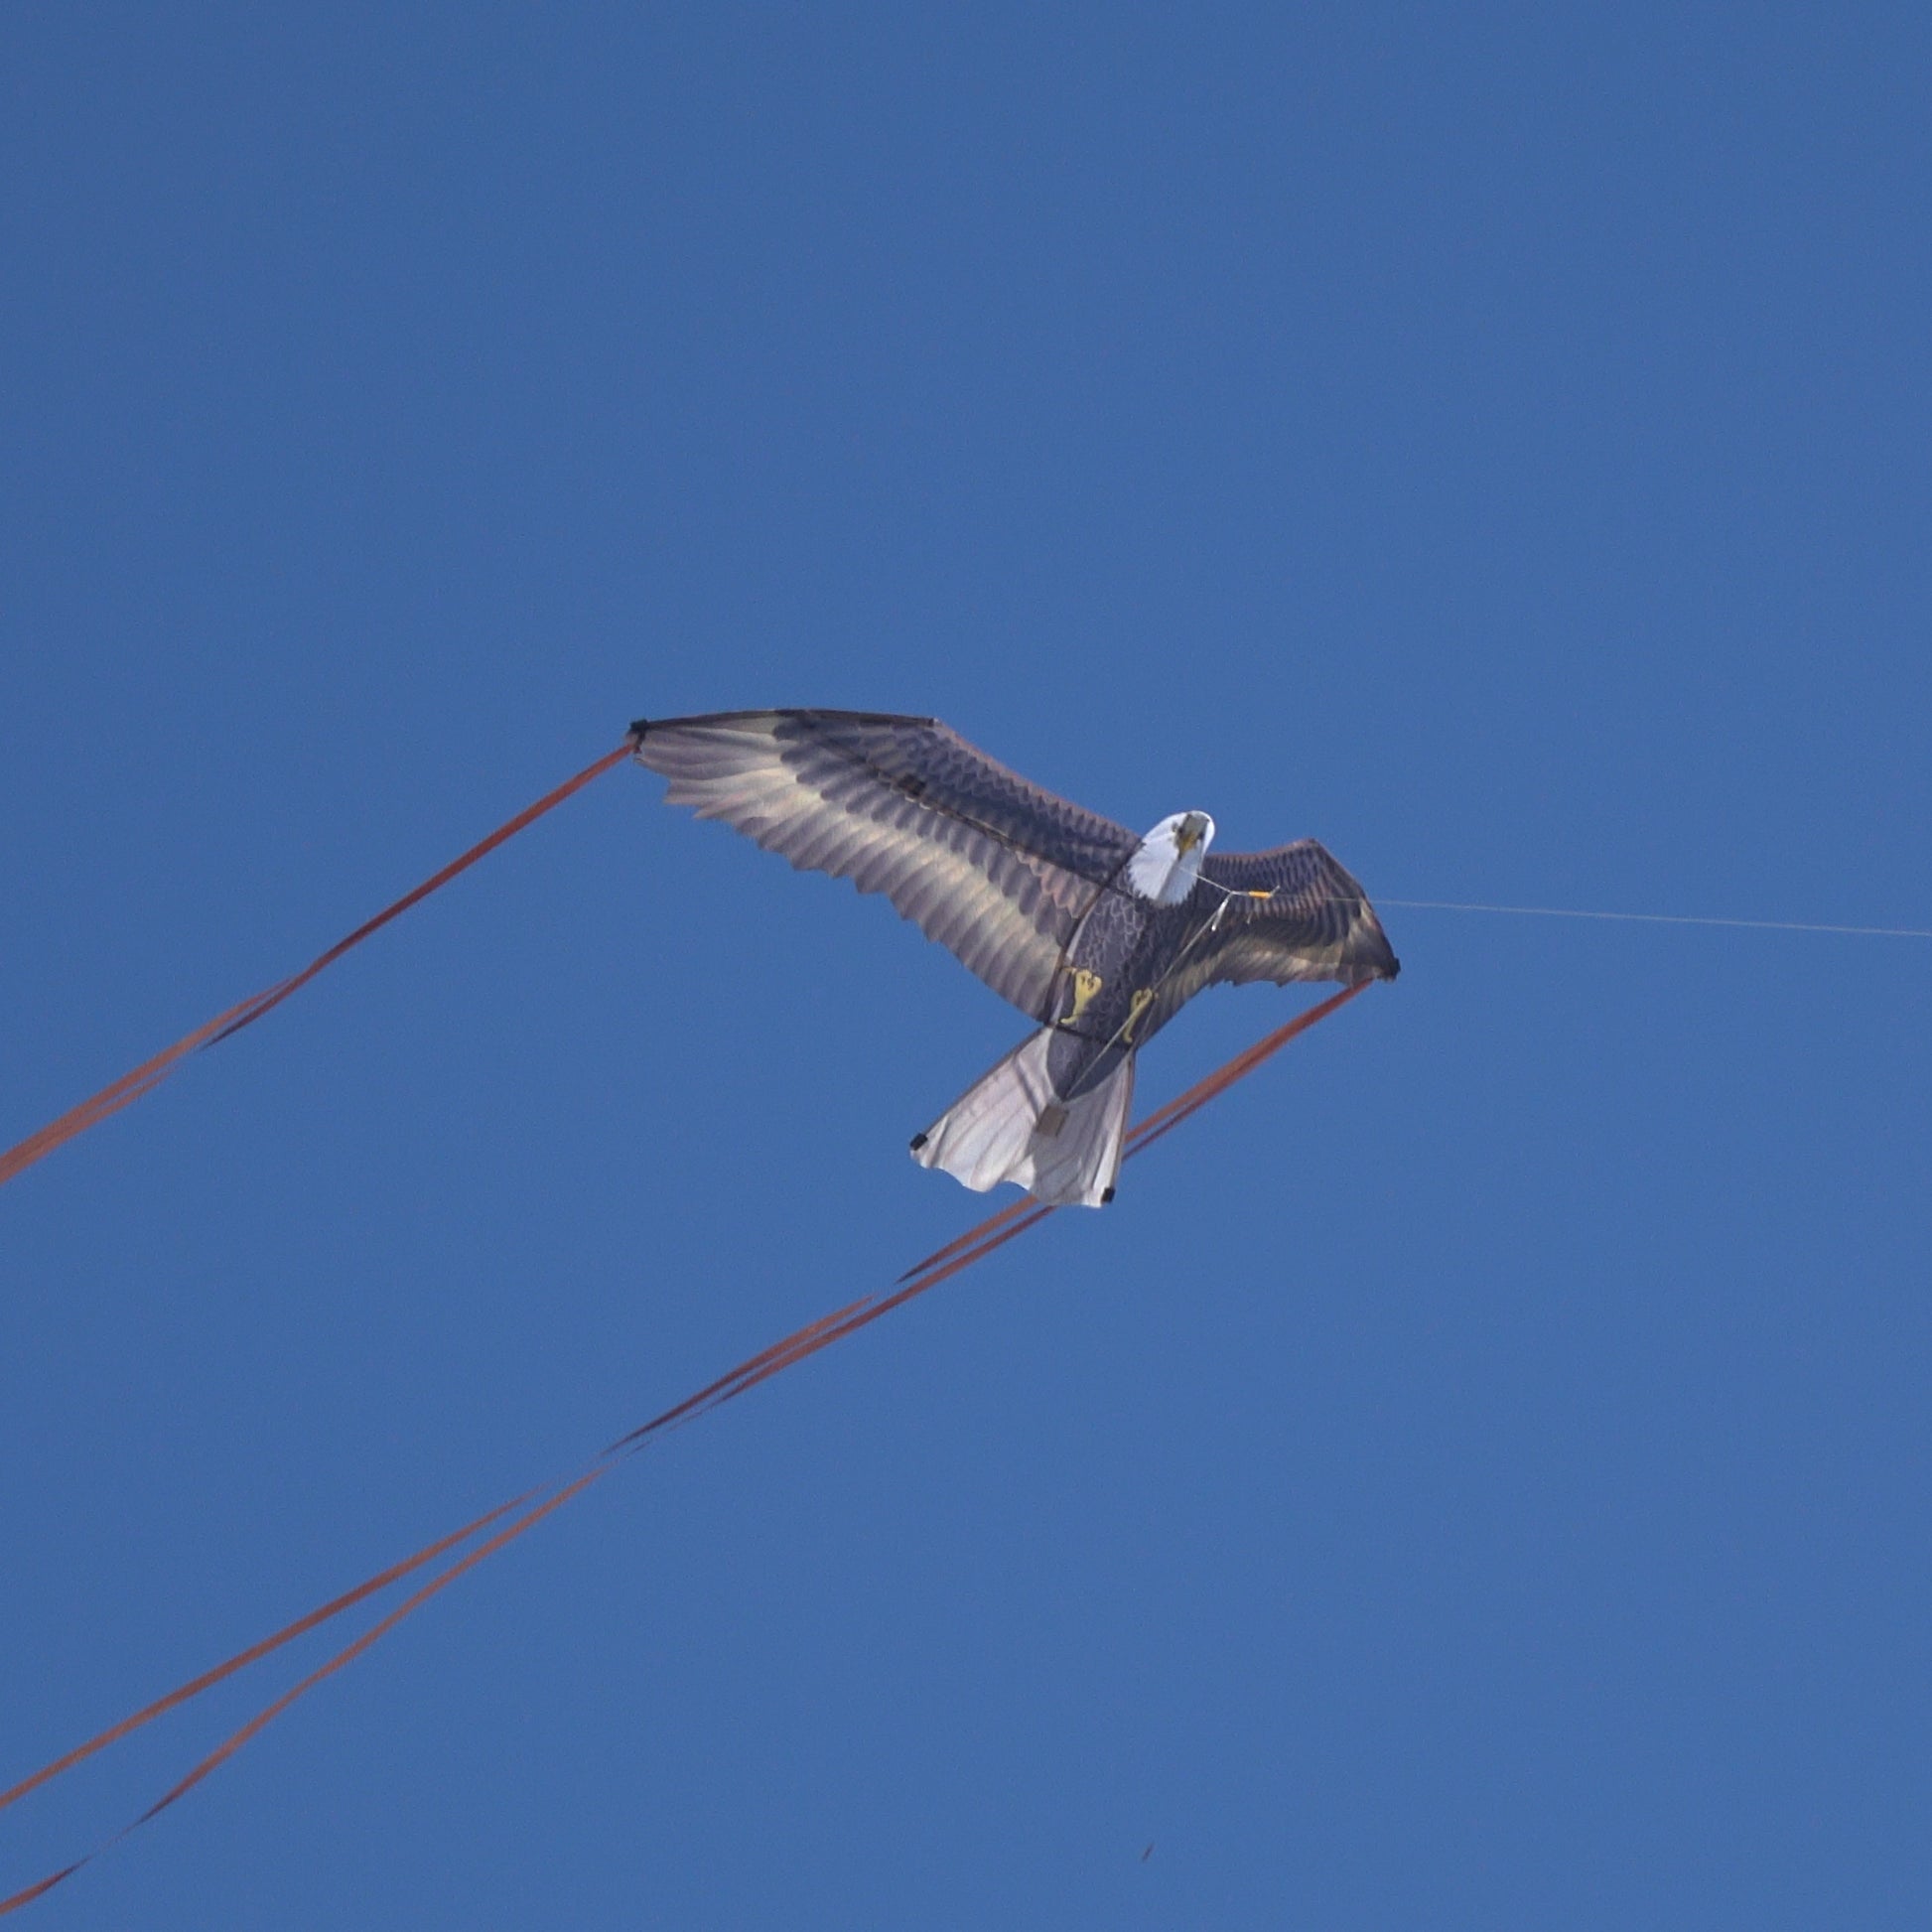 A photo of the X Kites Birds of Prey Falcon Nylon Bird Kite flying from the side